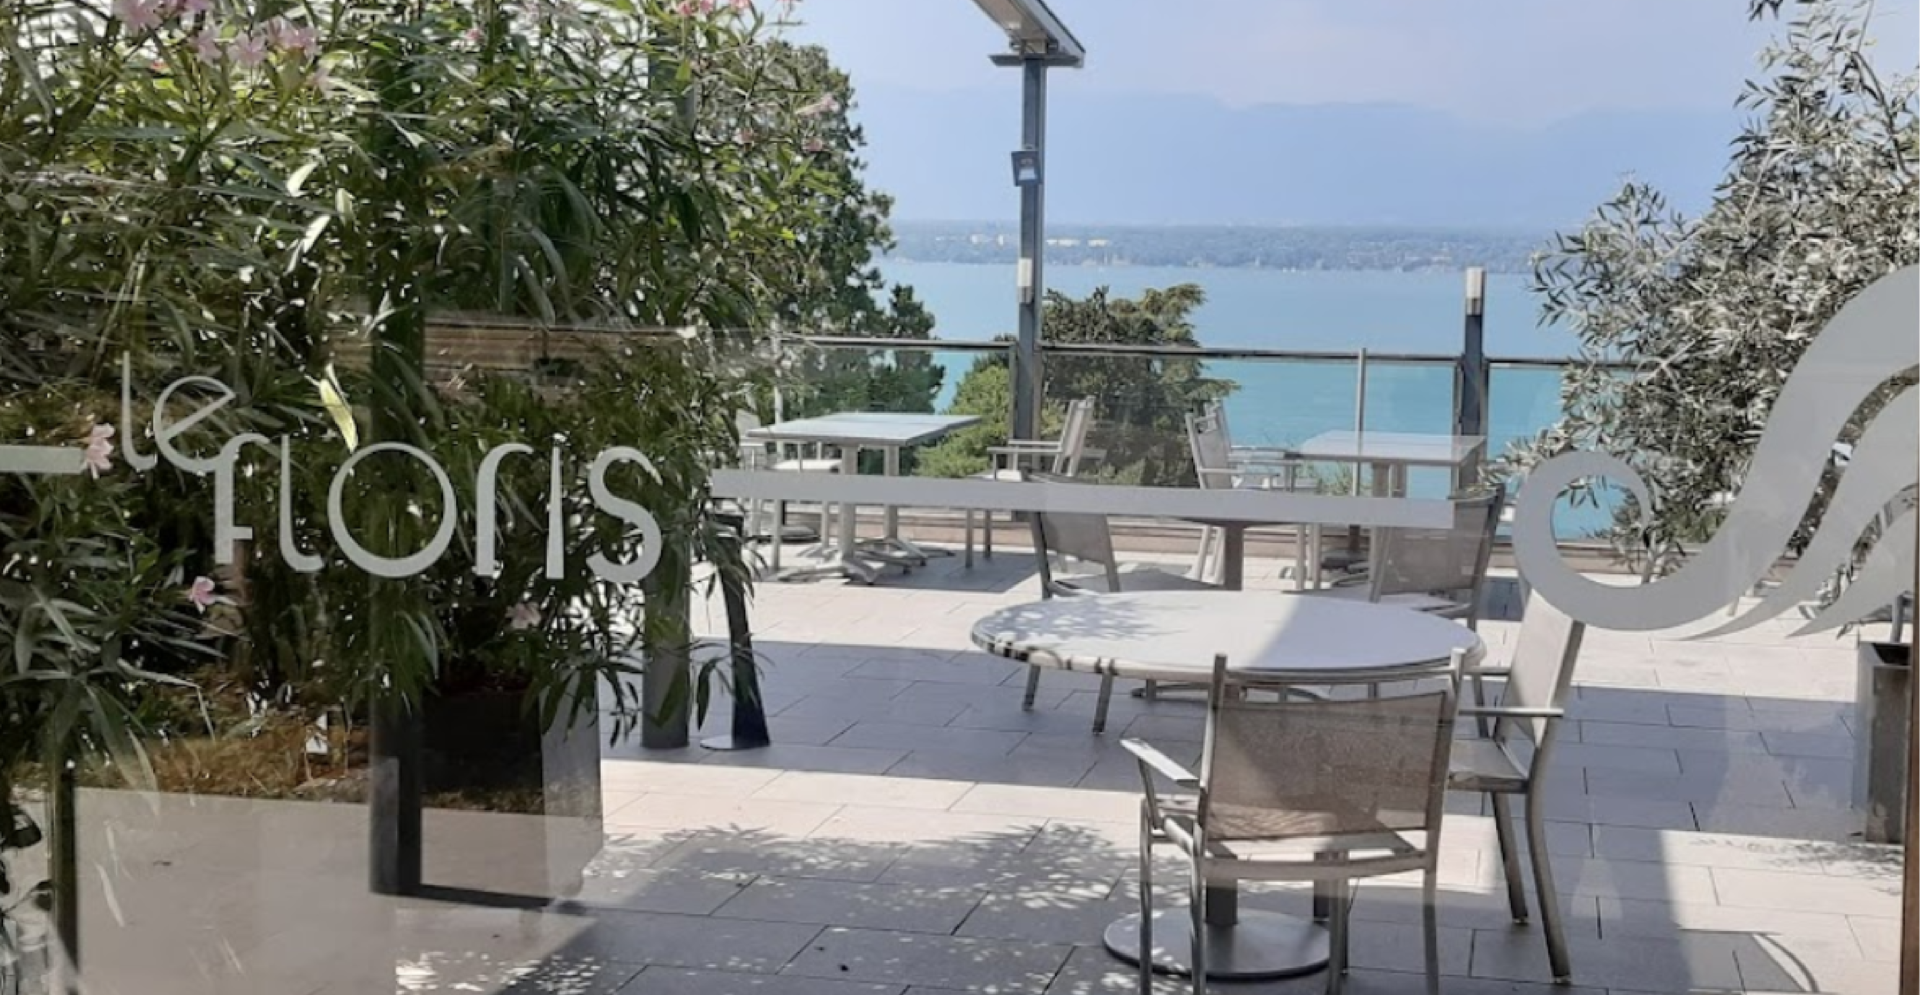 Terrace of Le Floris restaurant on Lake Geneva